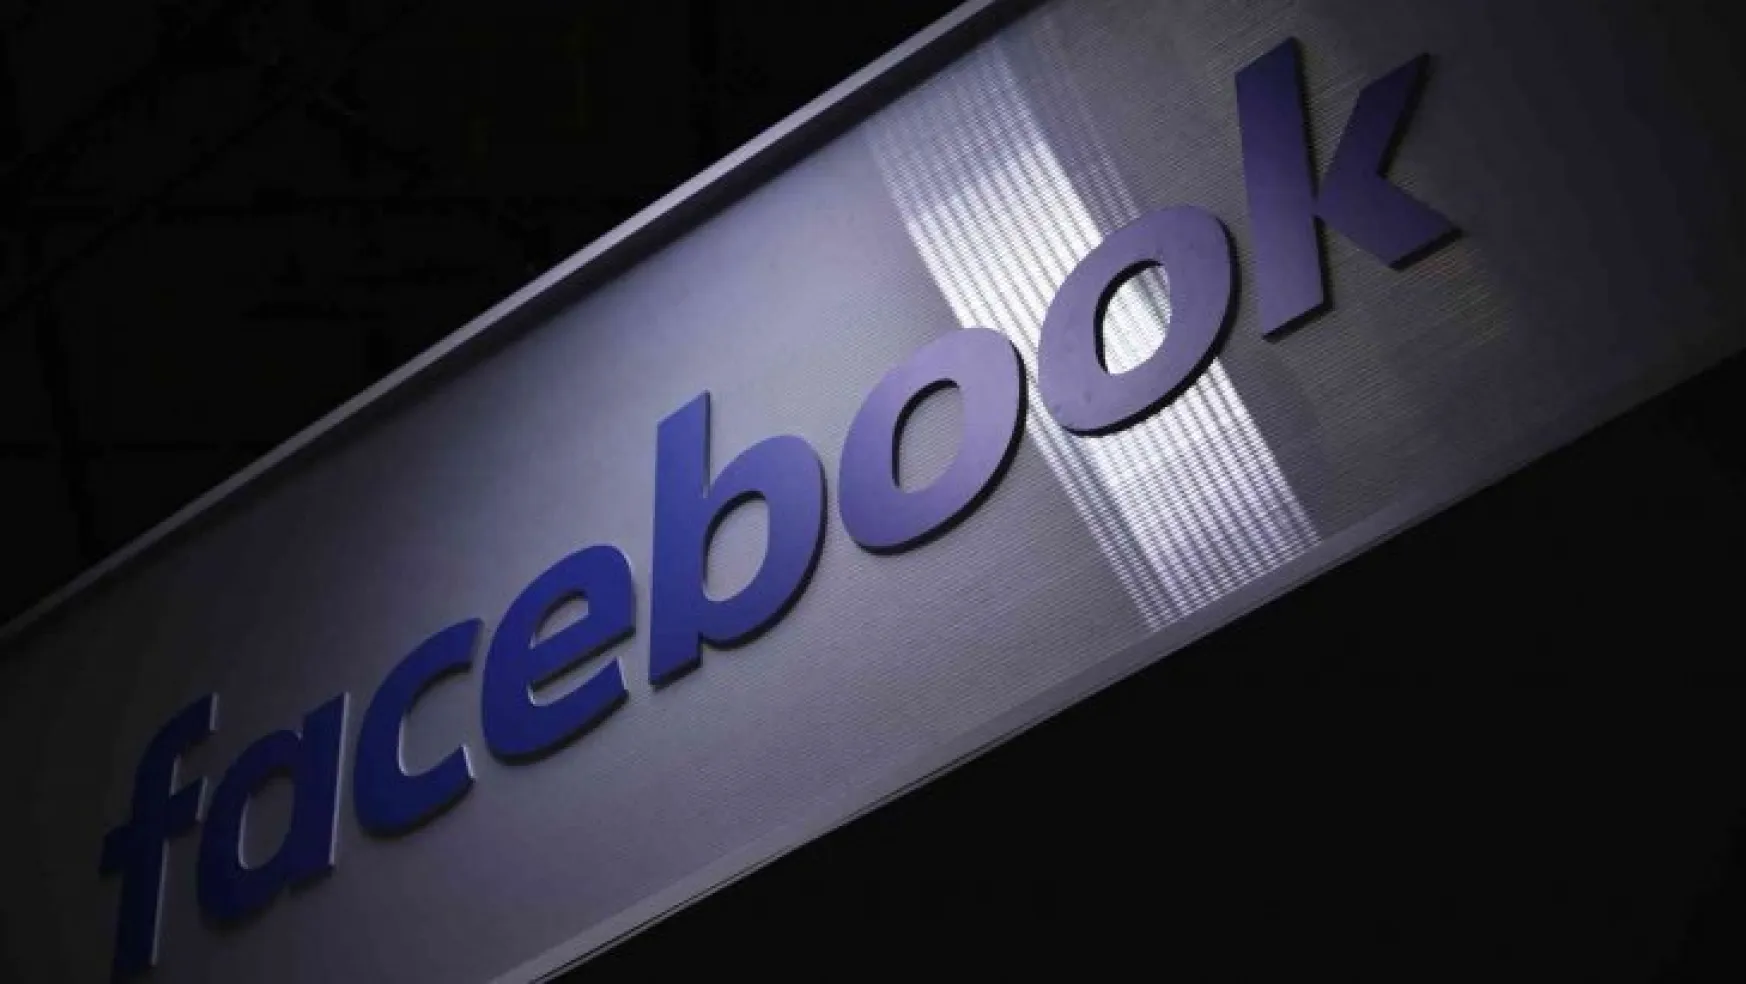 Fransa'dan Google ve Facebook'a toplam 210 milyon euro para cezası